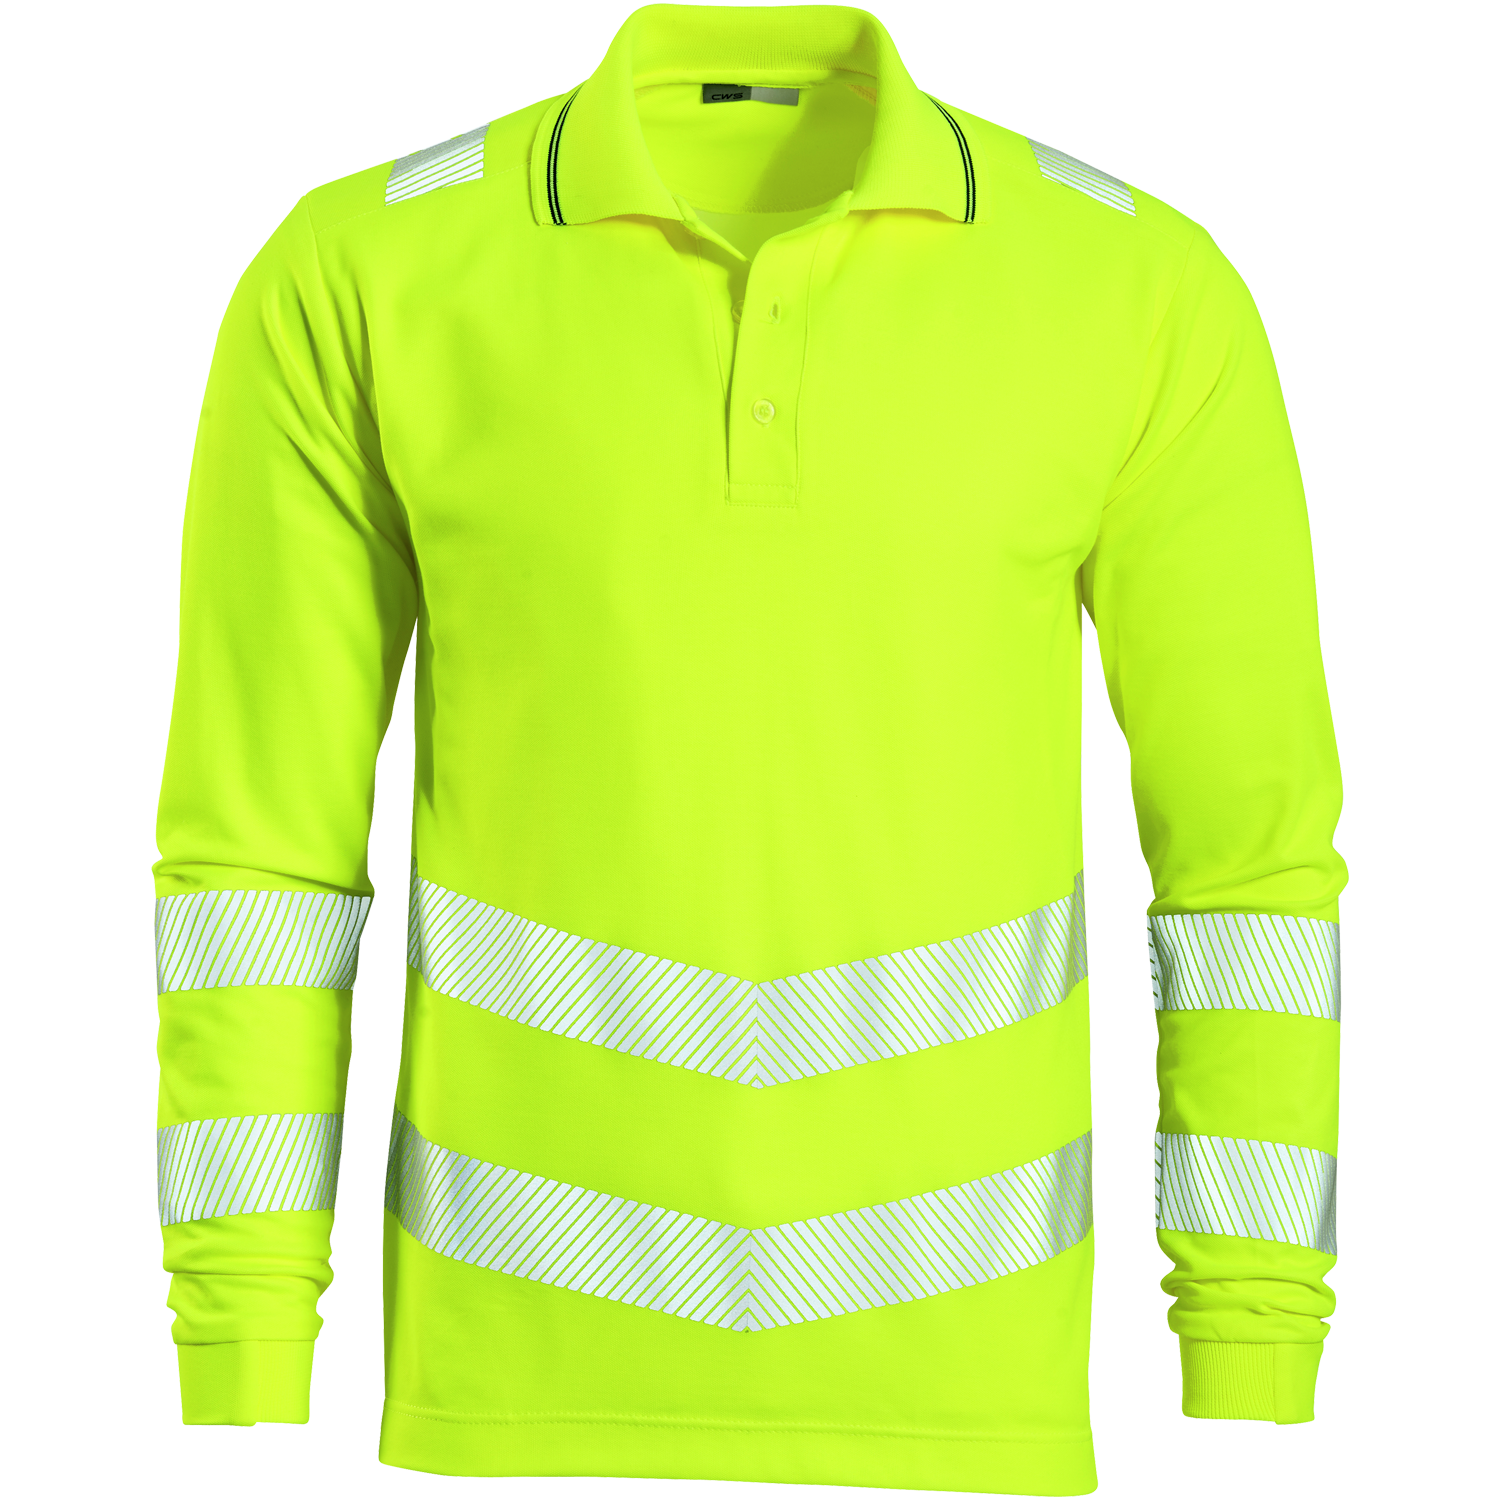 CWS Core HighVis Poloshirt HighVis Yellow w/ Reflective Stripes long sleeves